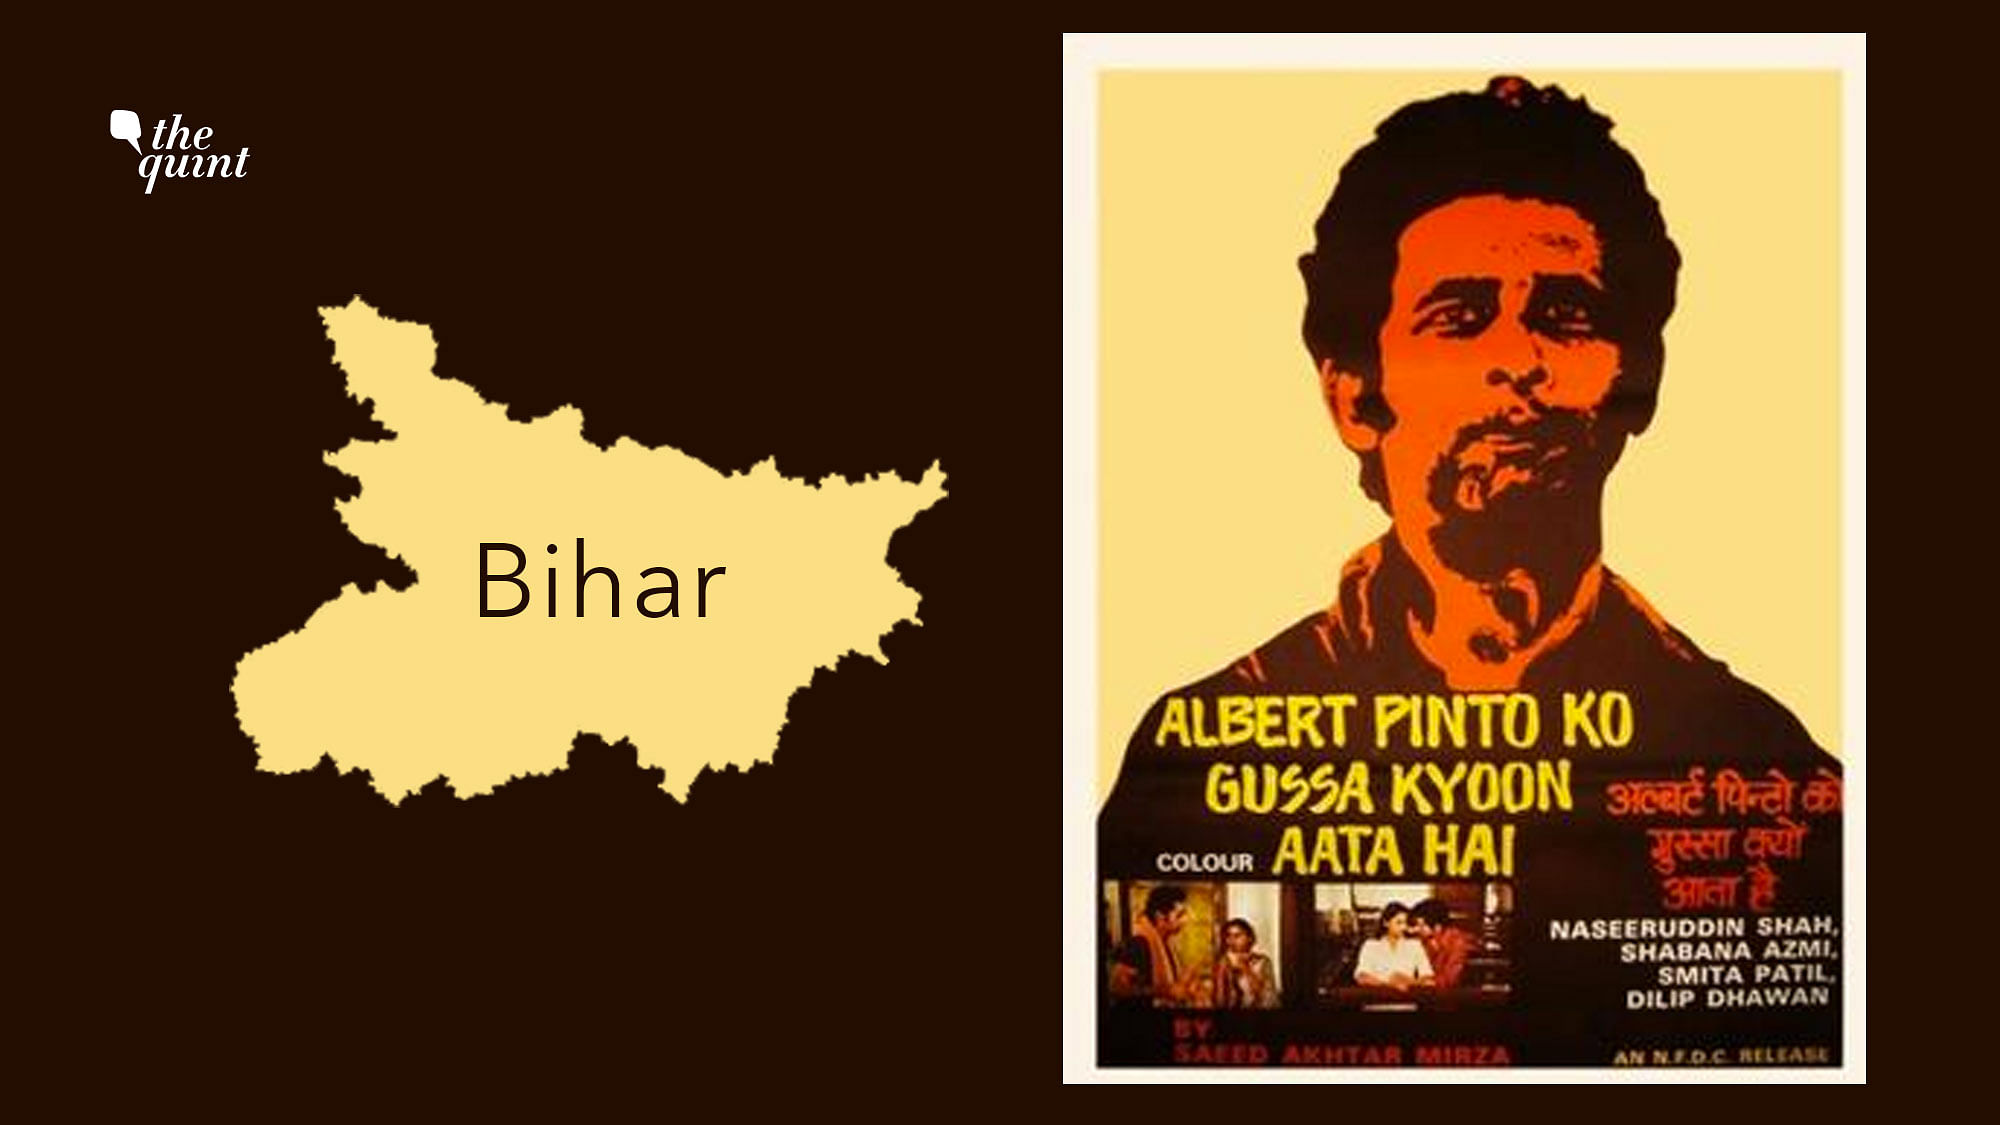 Image of Bihar map and poster of 1980 film ‘Albert Pinto Ko Gussa Kyoon Aata Hai’ used for representational purposes.